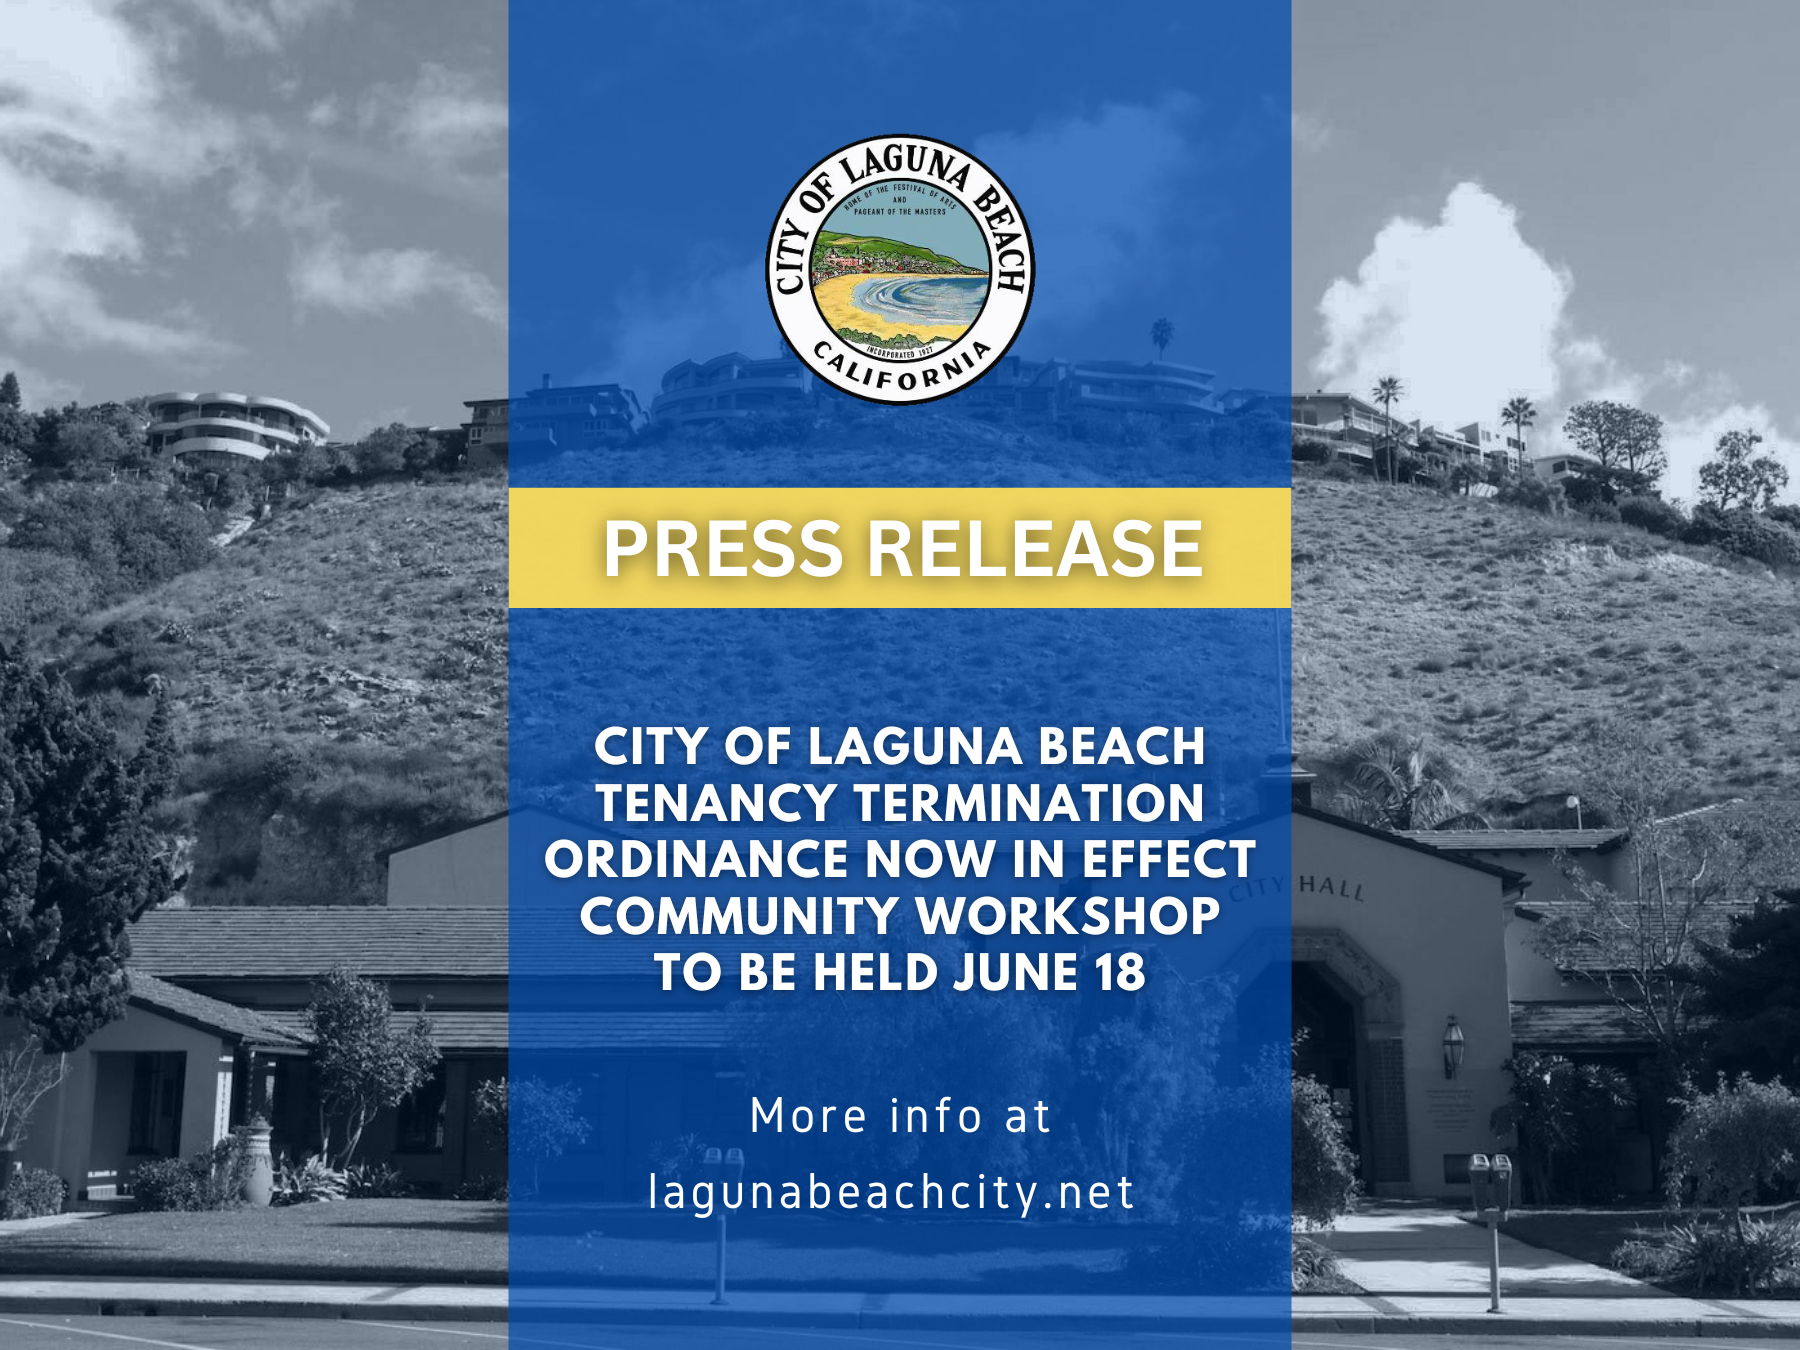 Press Release - City of Laguna Beach Tenancy Termination Ordinance Now in Effect Community Workshop to be Held June 18